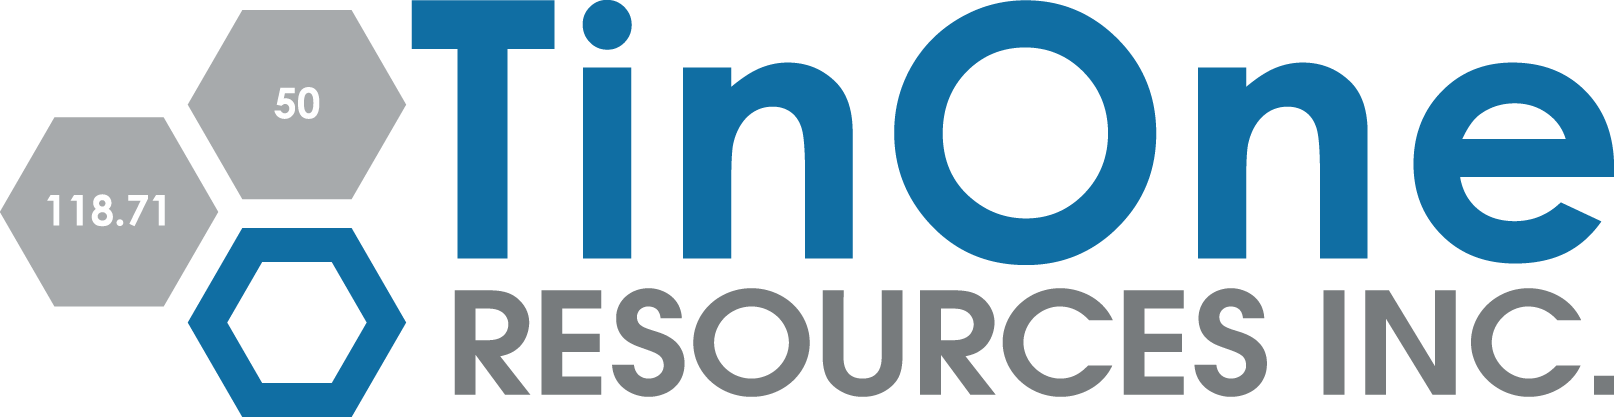 TinOne Resources Inc.